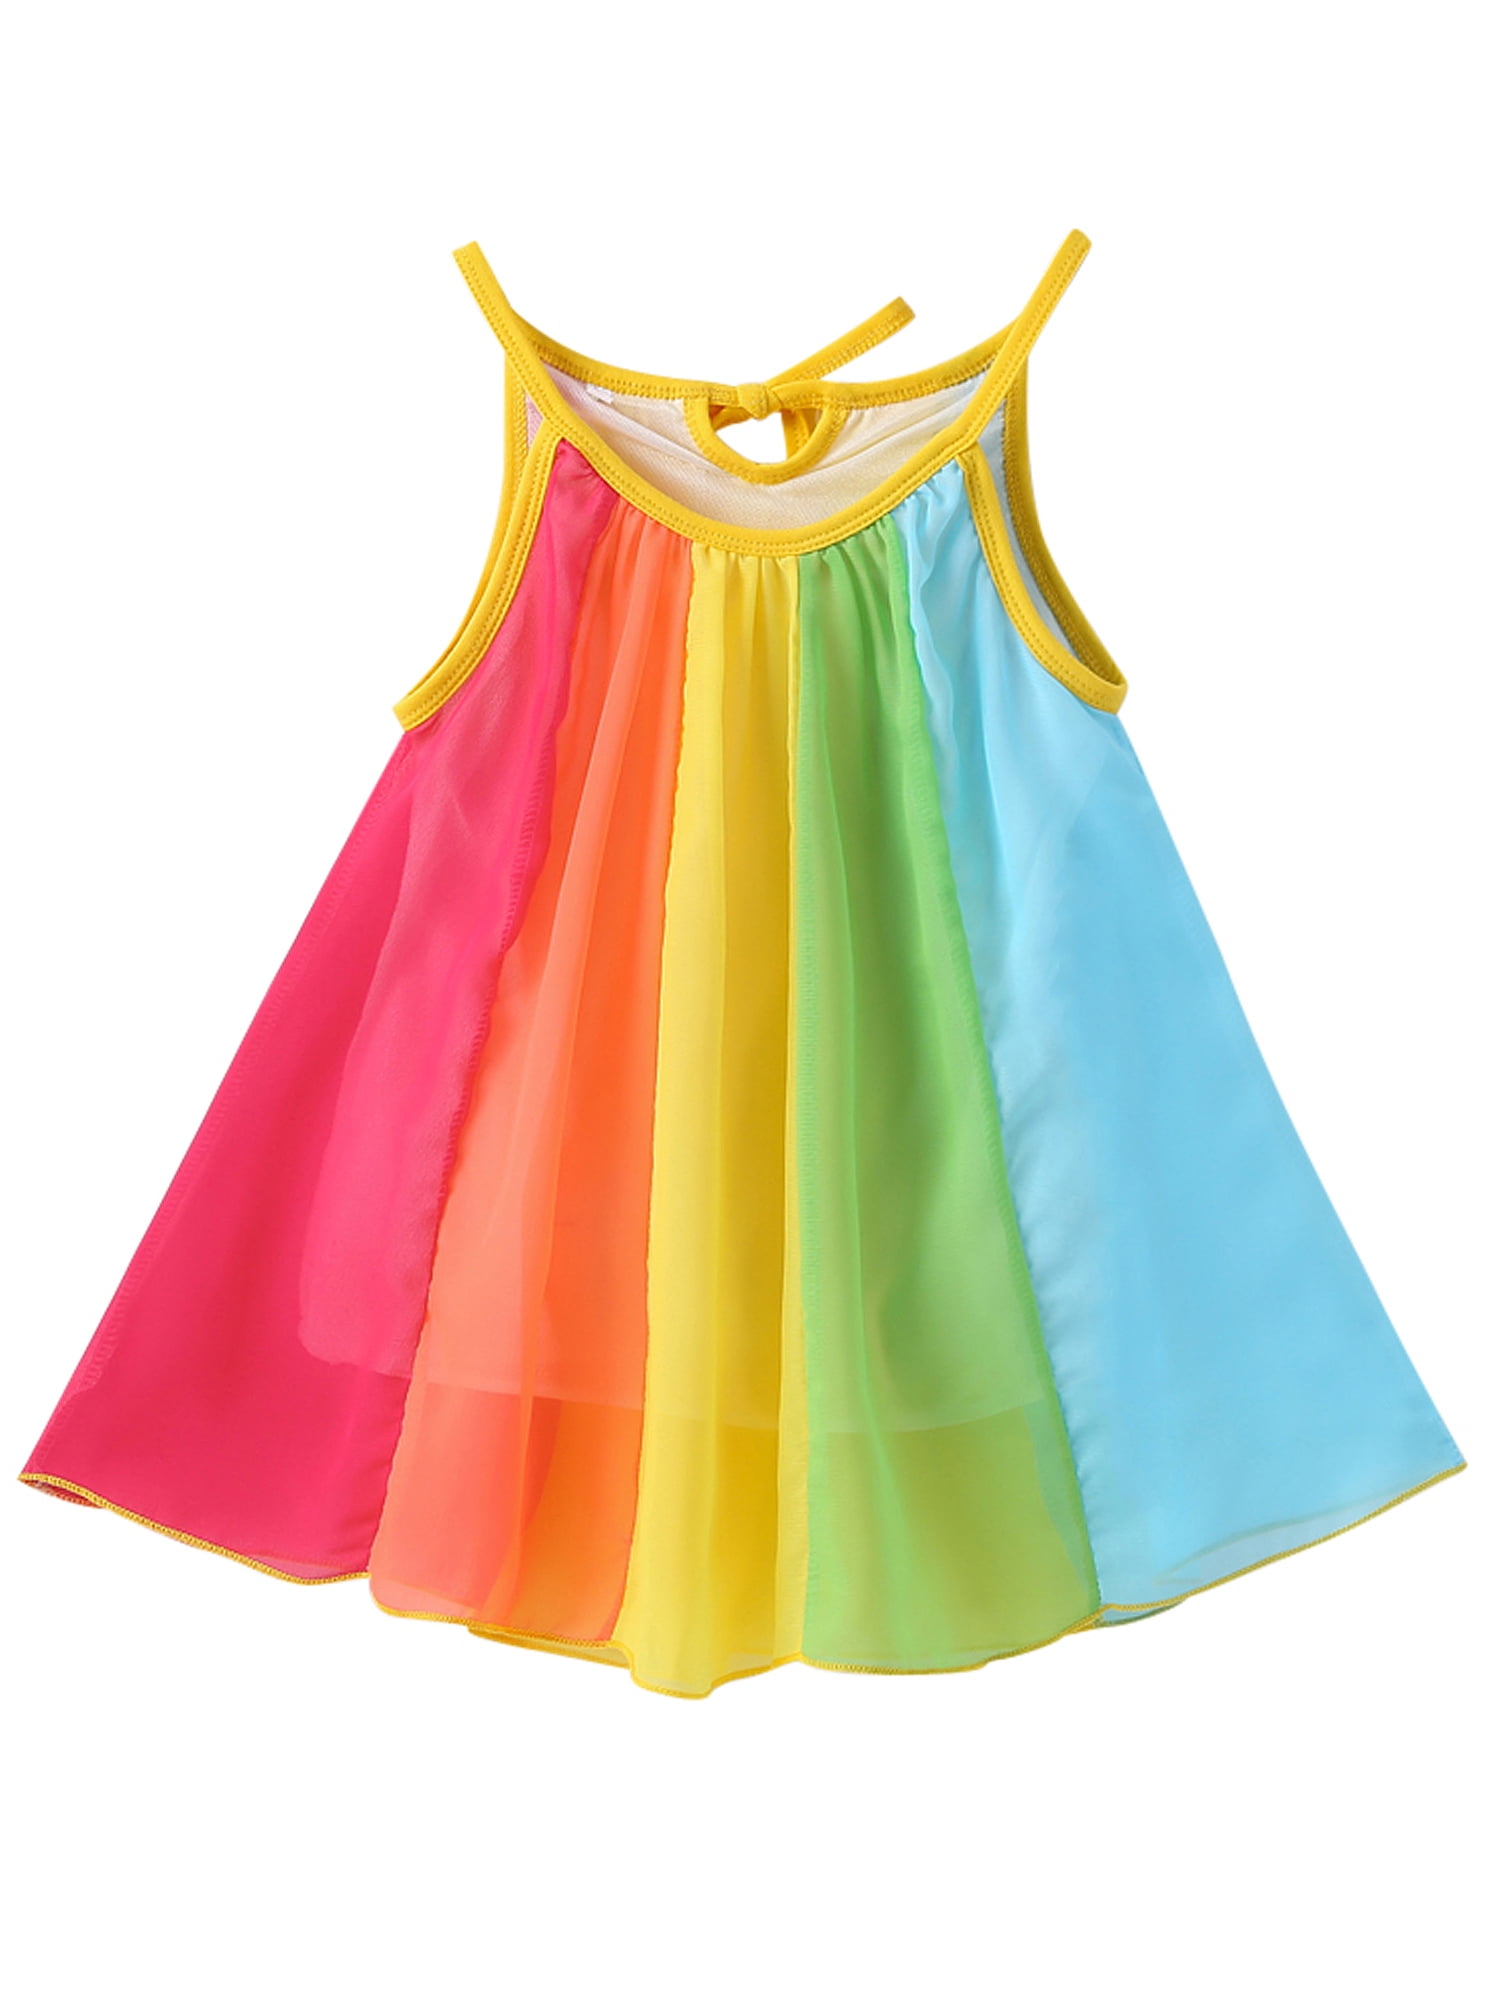 Summer Toddler Kids Baby Girls Princess Dresses Party Sleeveless Casual Sundress